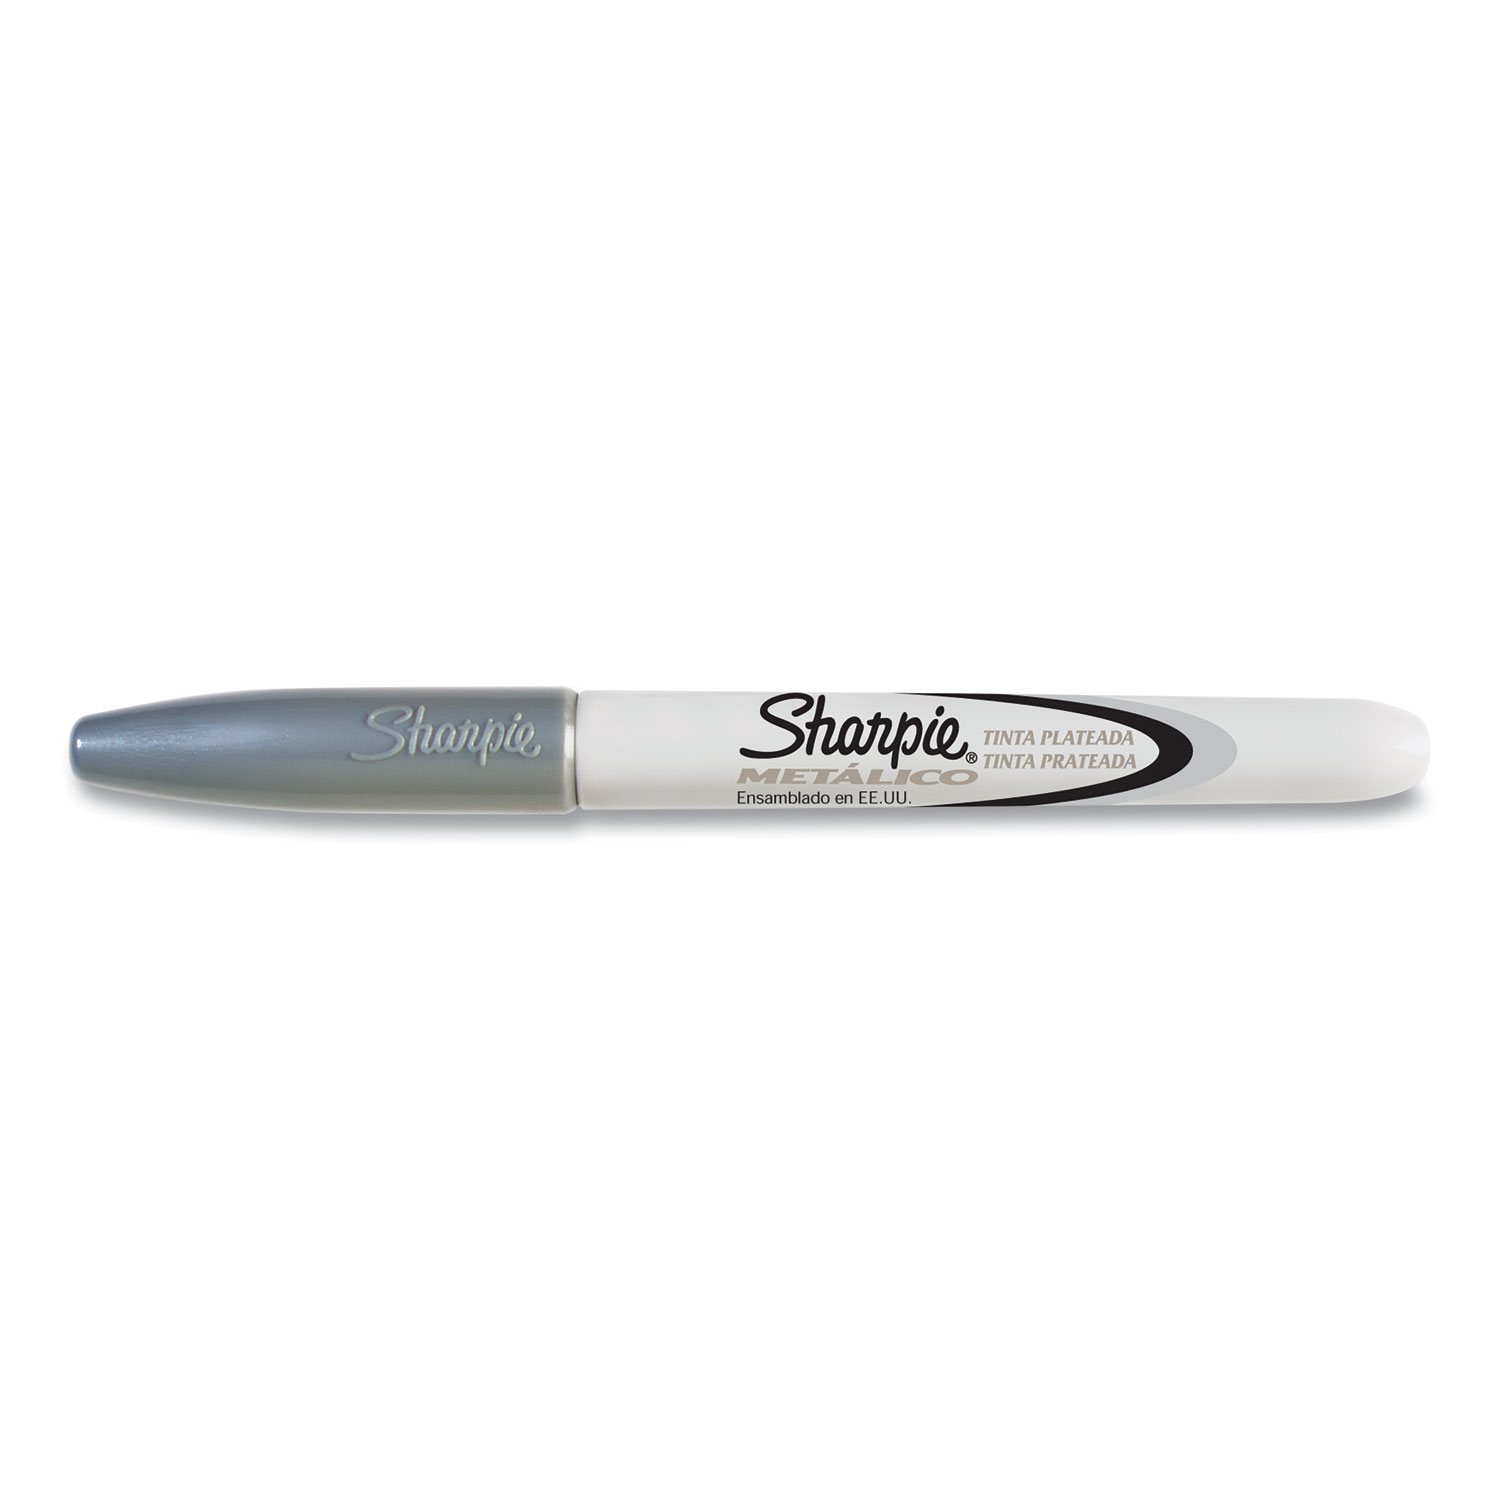 Sharpie Fine Metallic Permanent Marker Value ct , Silver ct of 36 | Michaels